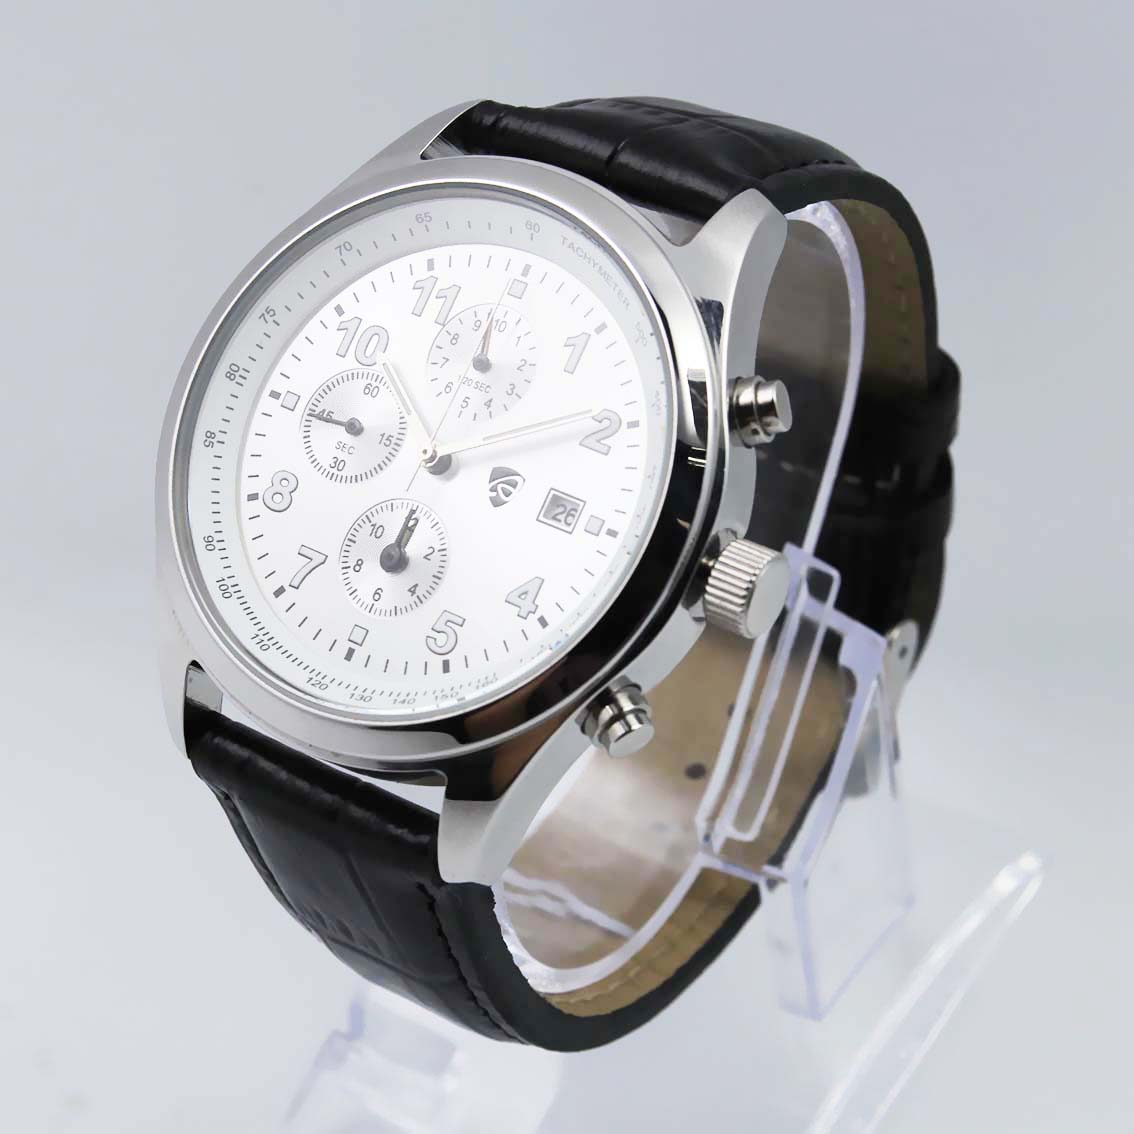 #02090Men's wristwatch quartz analog leather strap watch